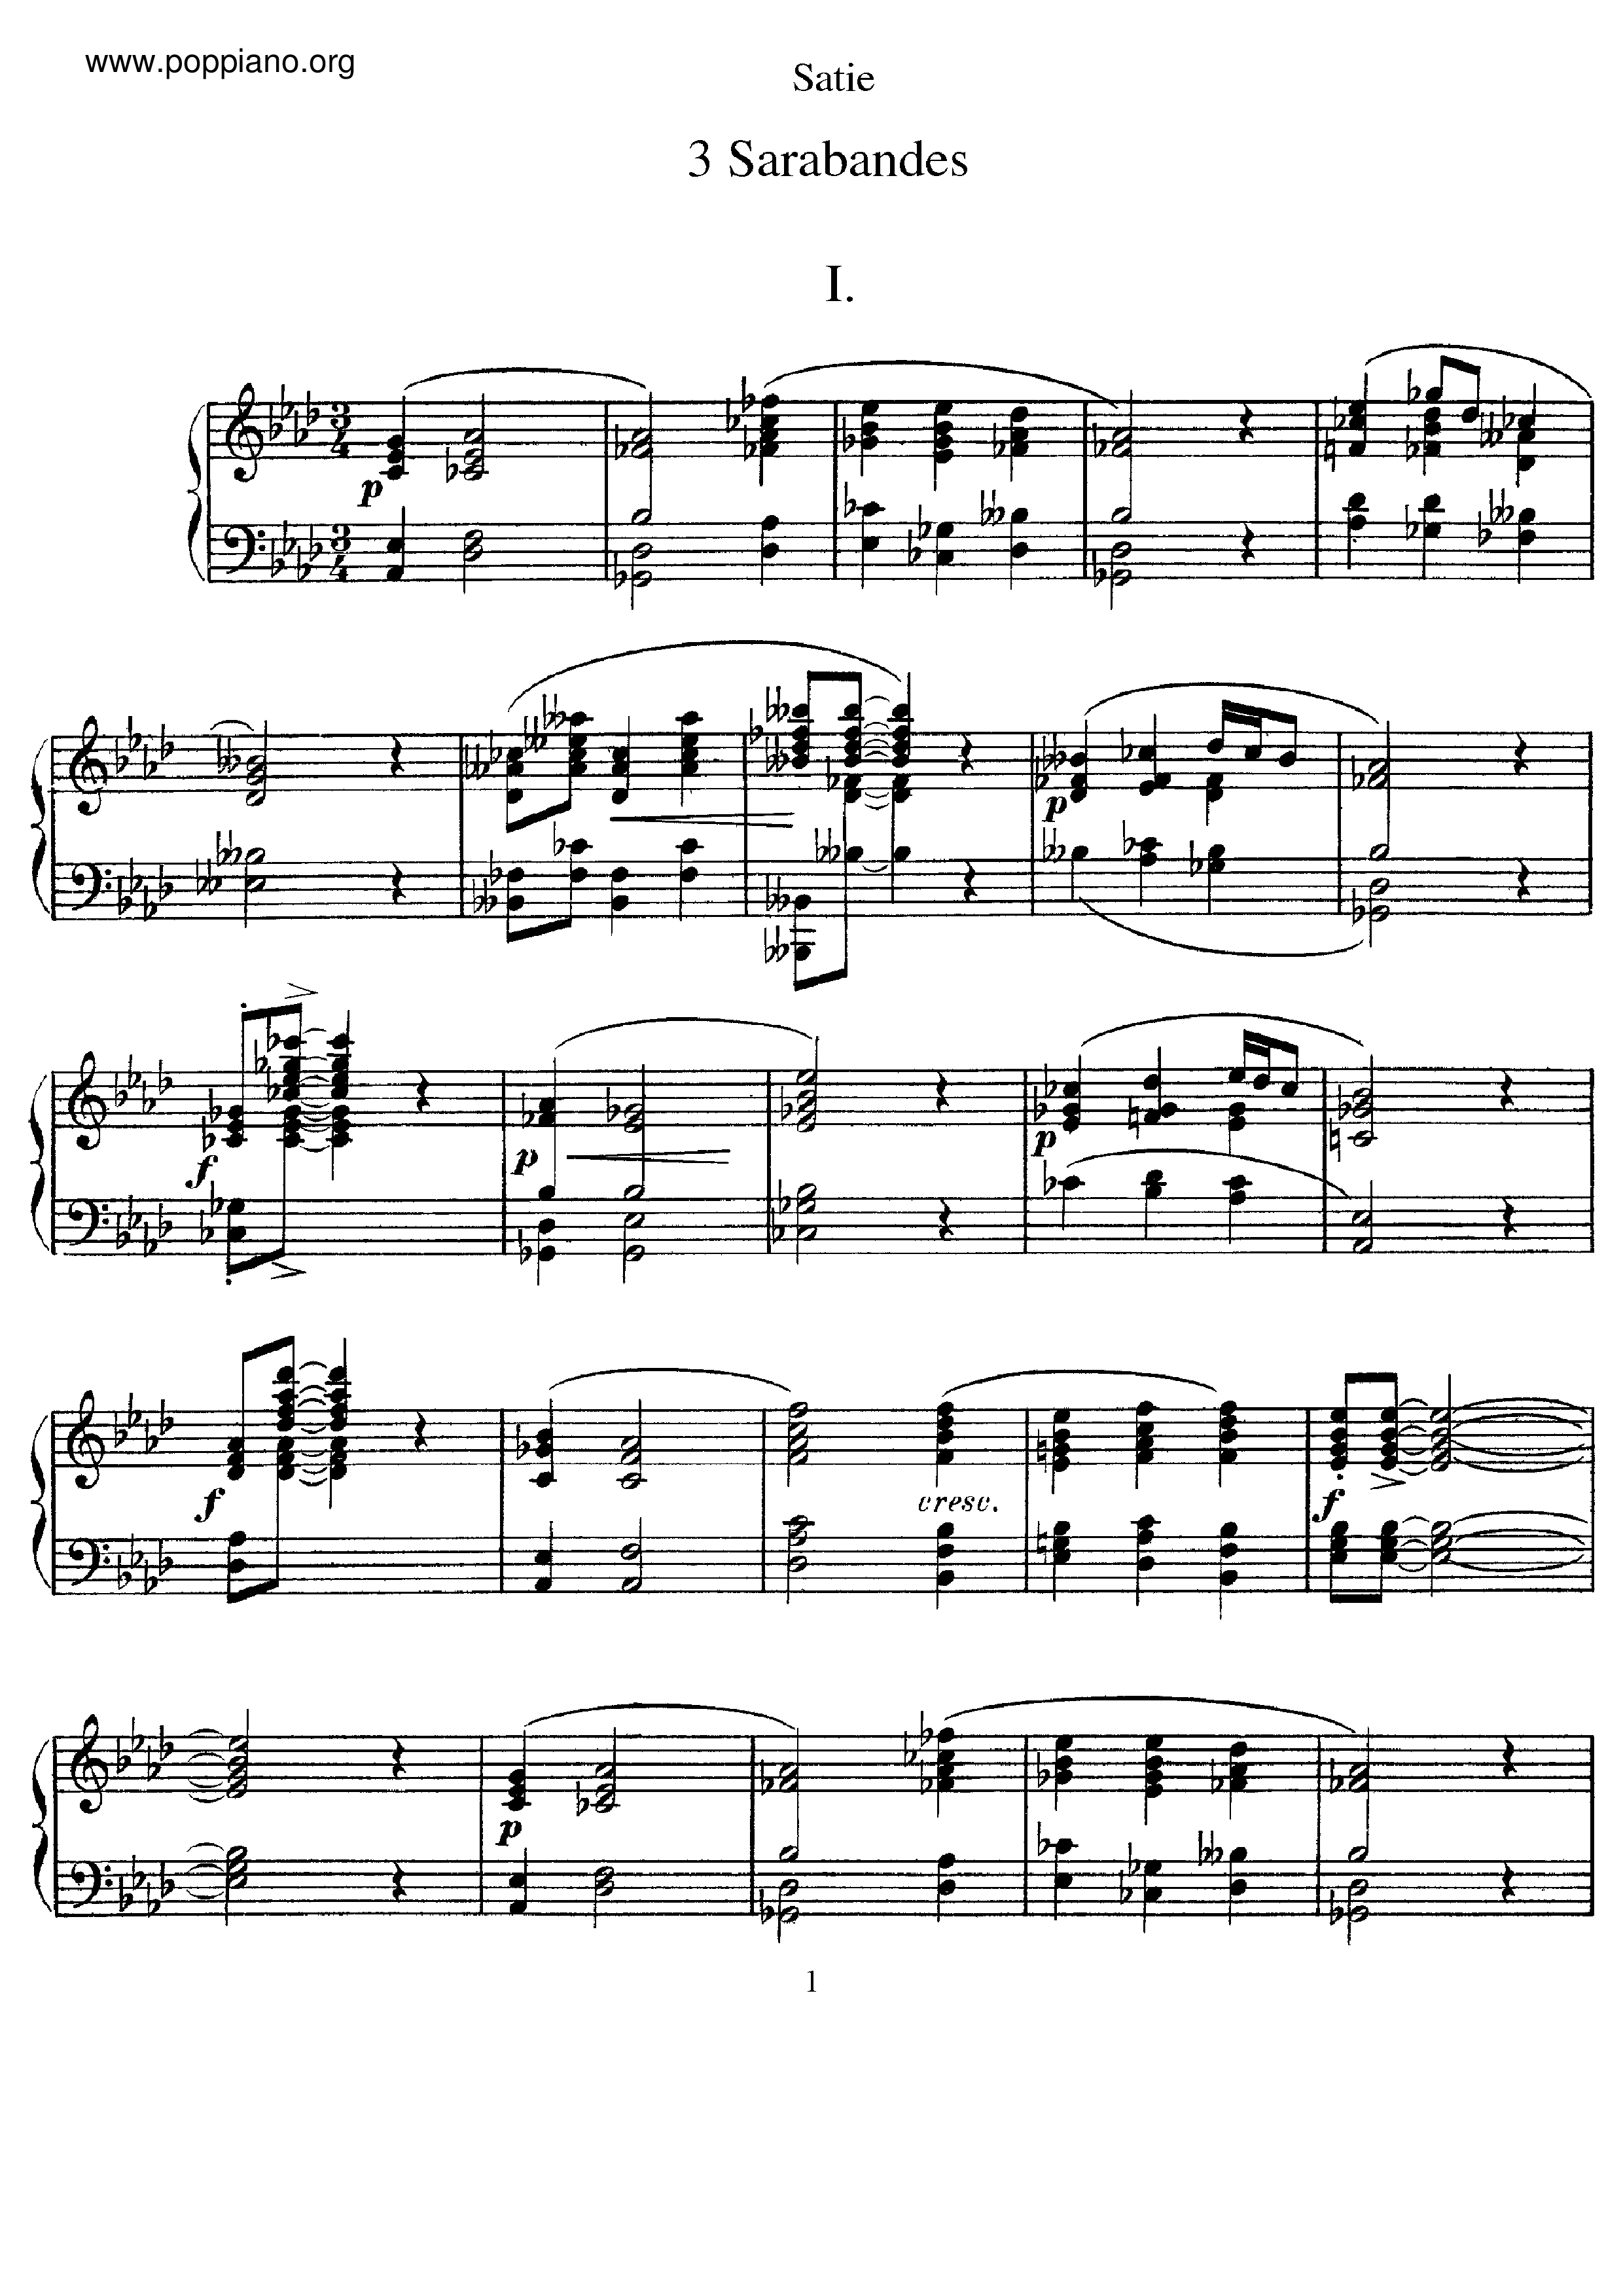 3 Sarabandesピアノ譜